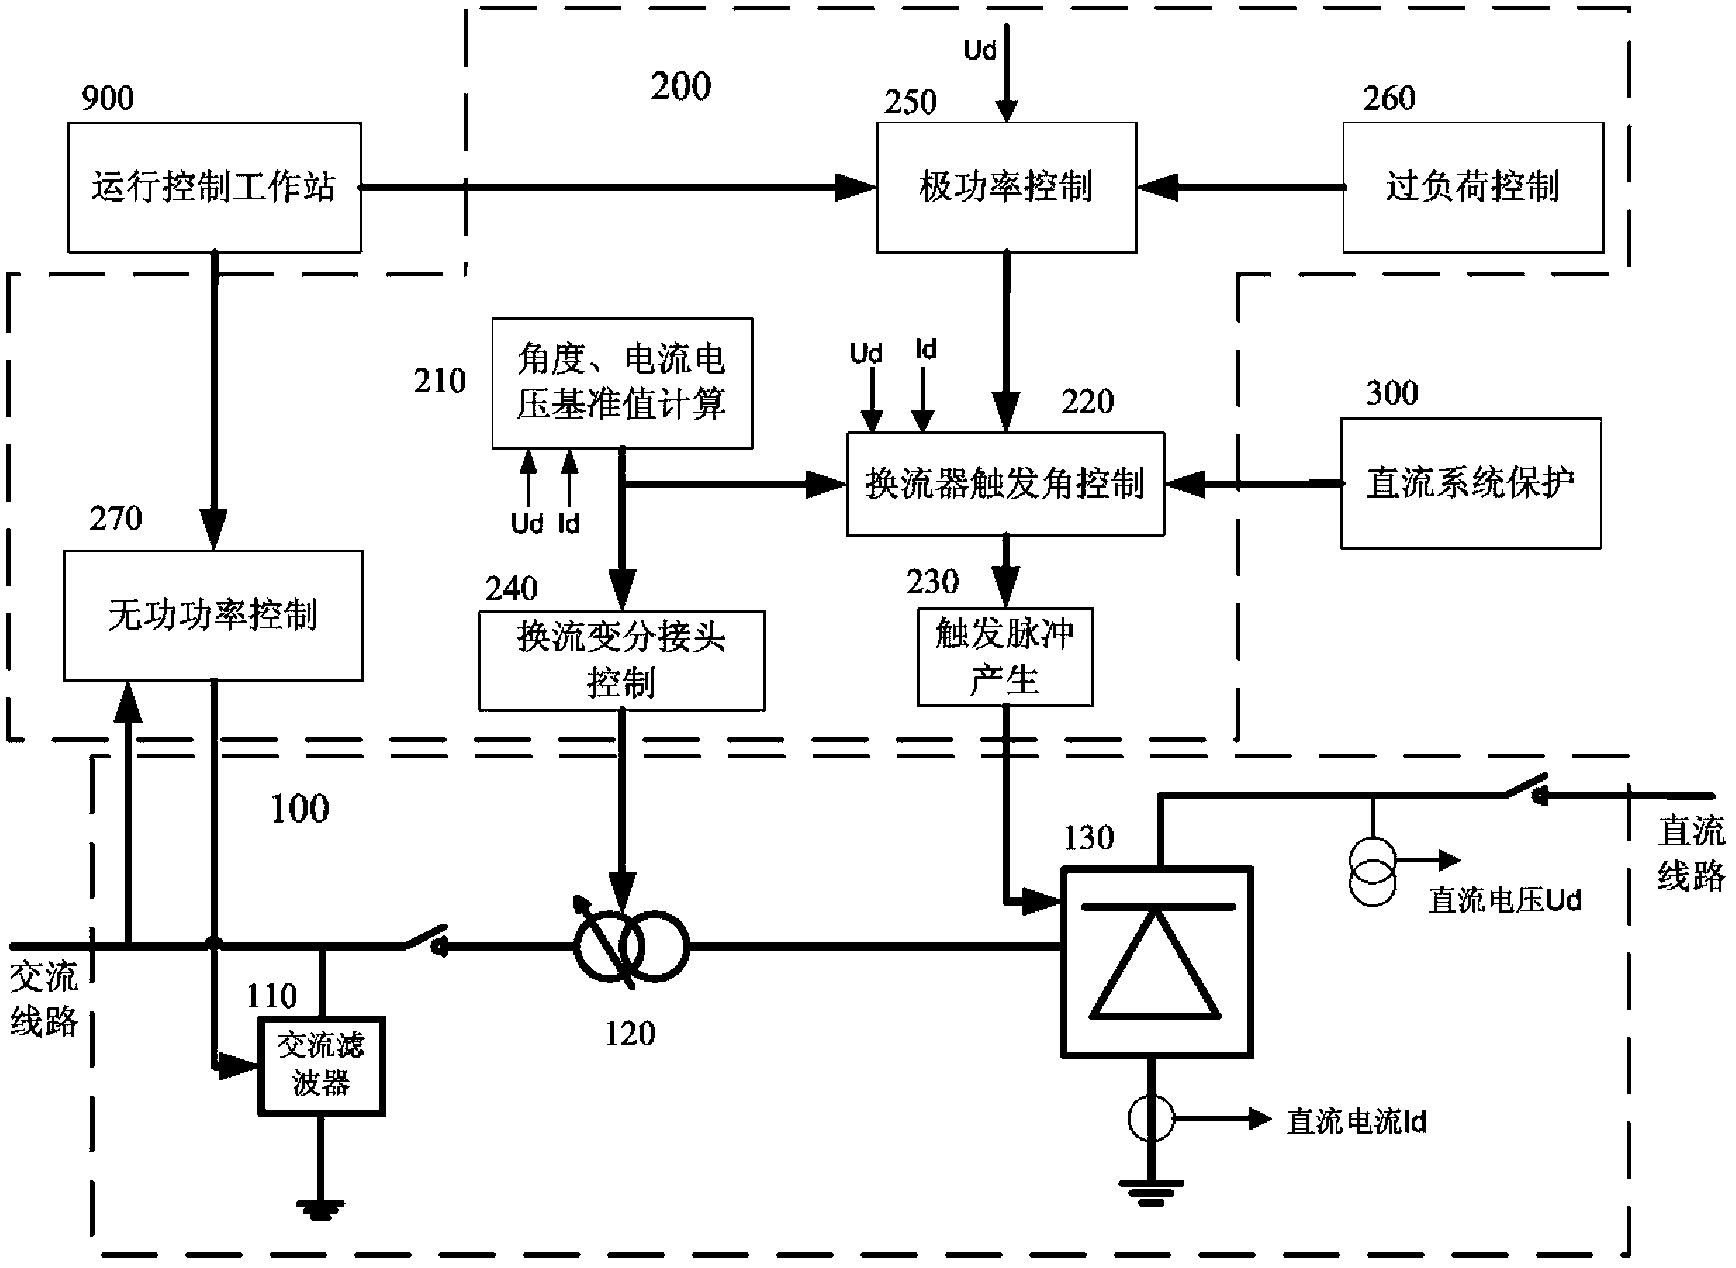 Trigger pulse closed-loop circuit controlling simulation device